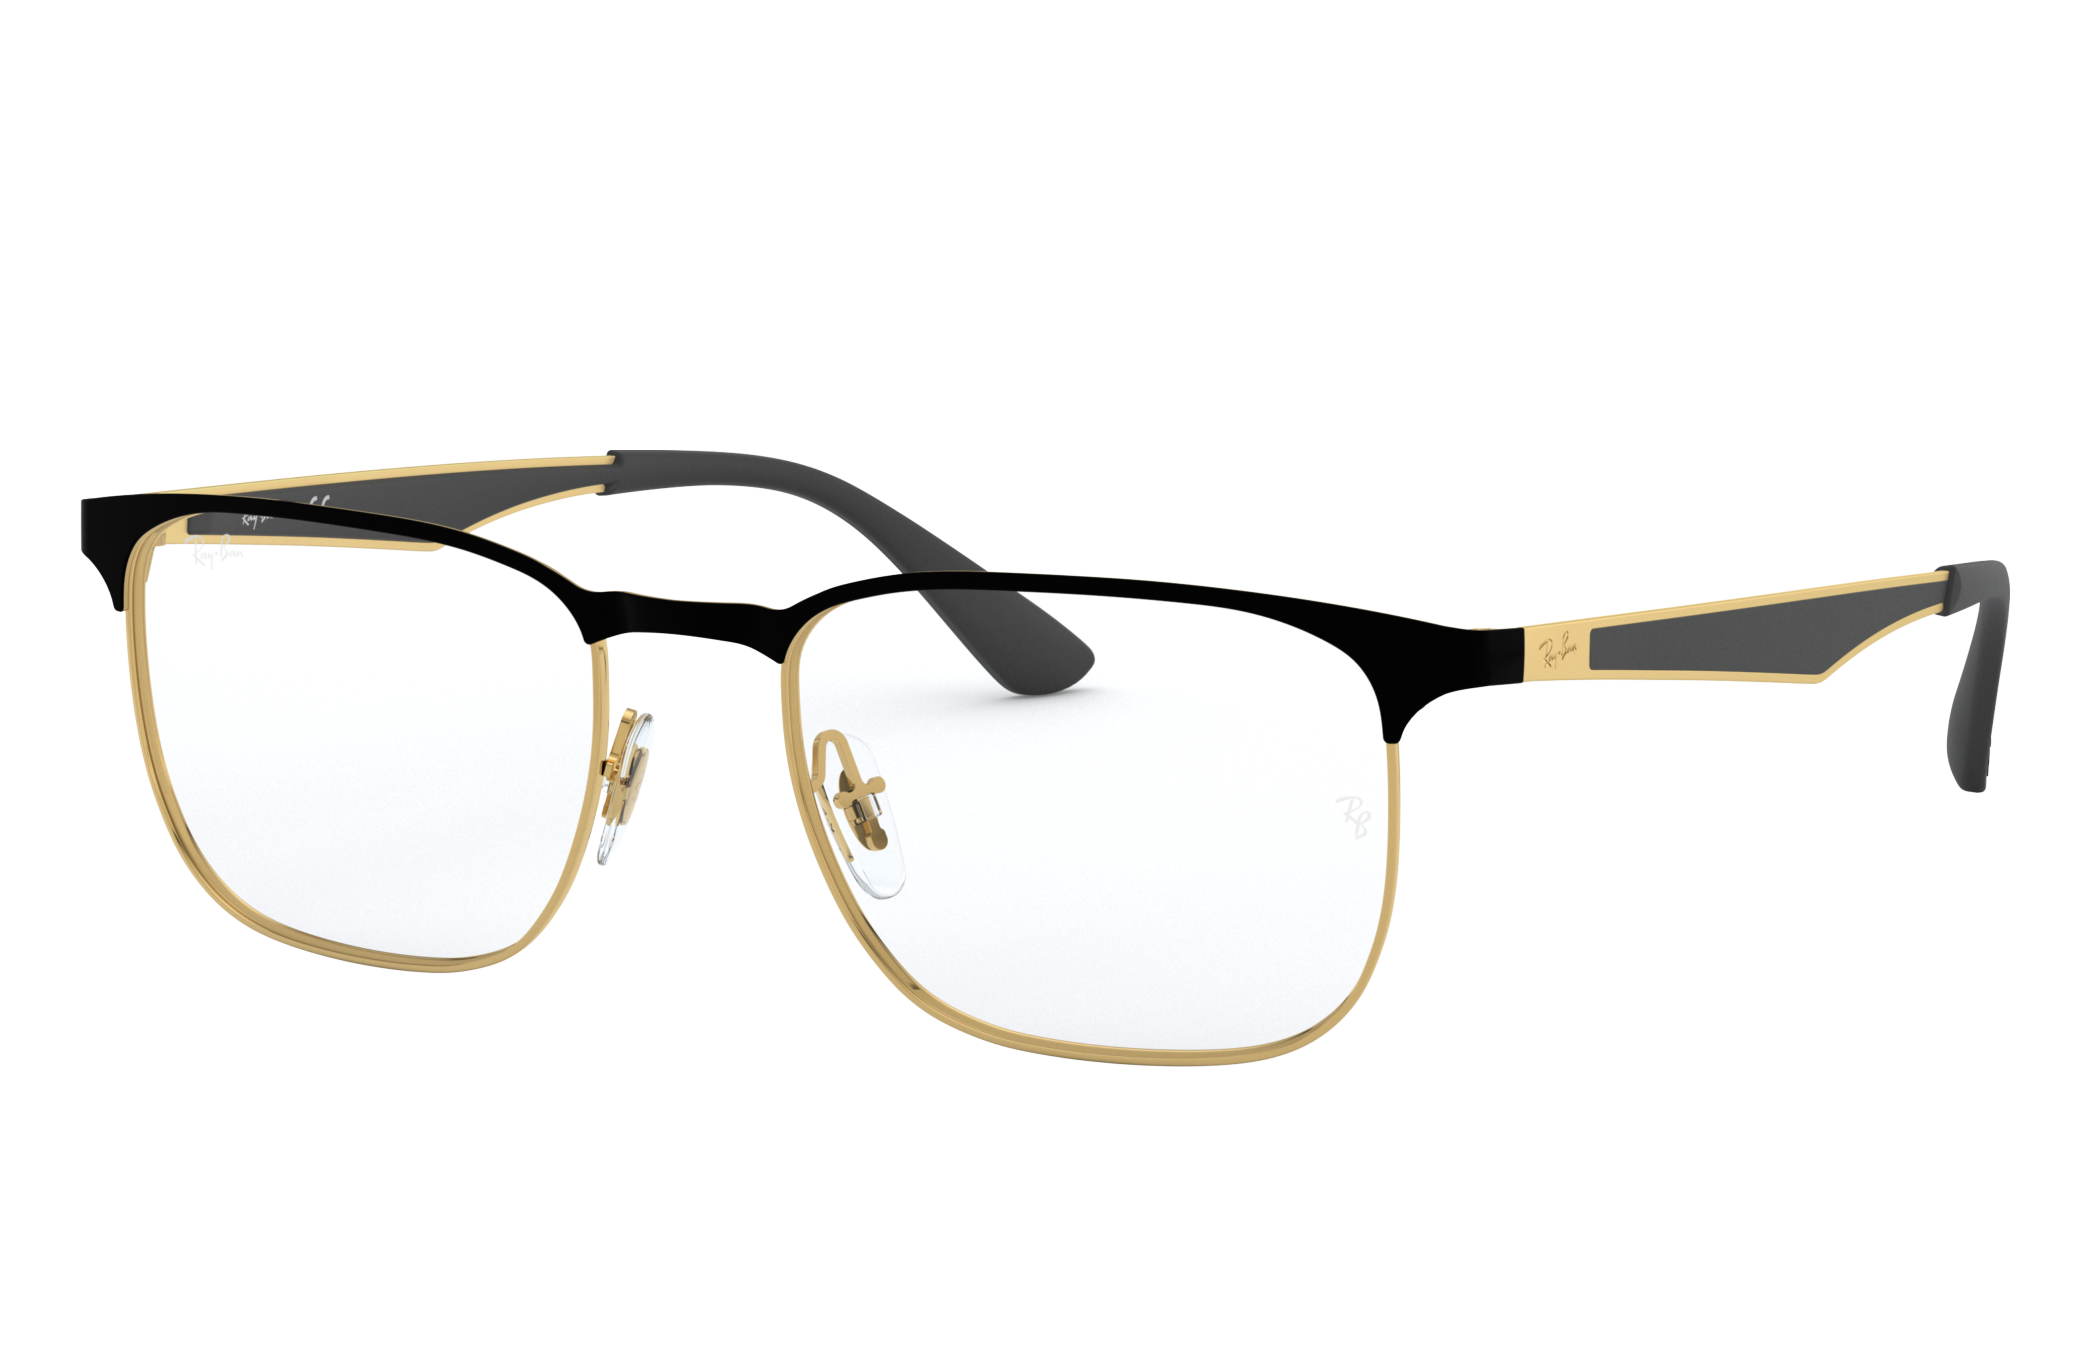 Rb6363 Optics Eyeglasses with Black On Gold Frame | Ray-Ban®